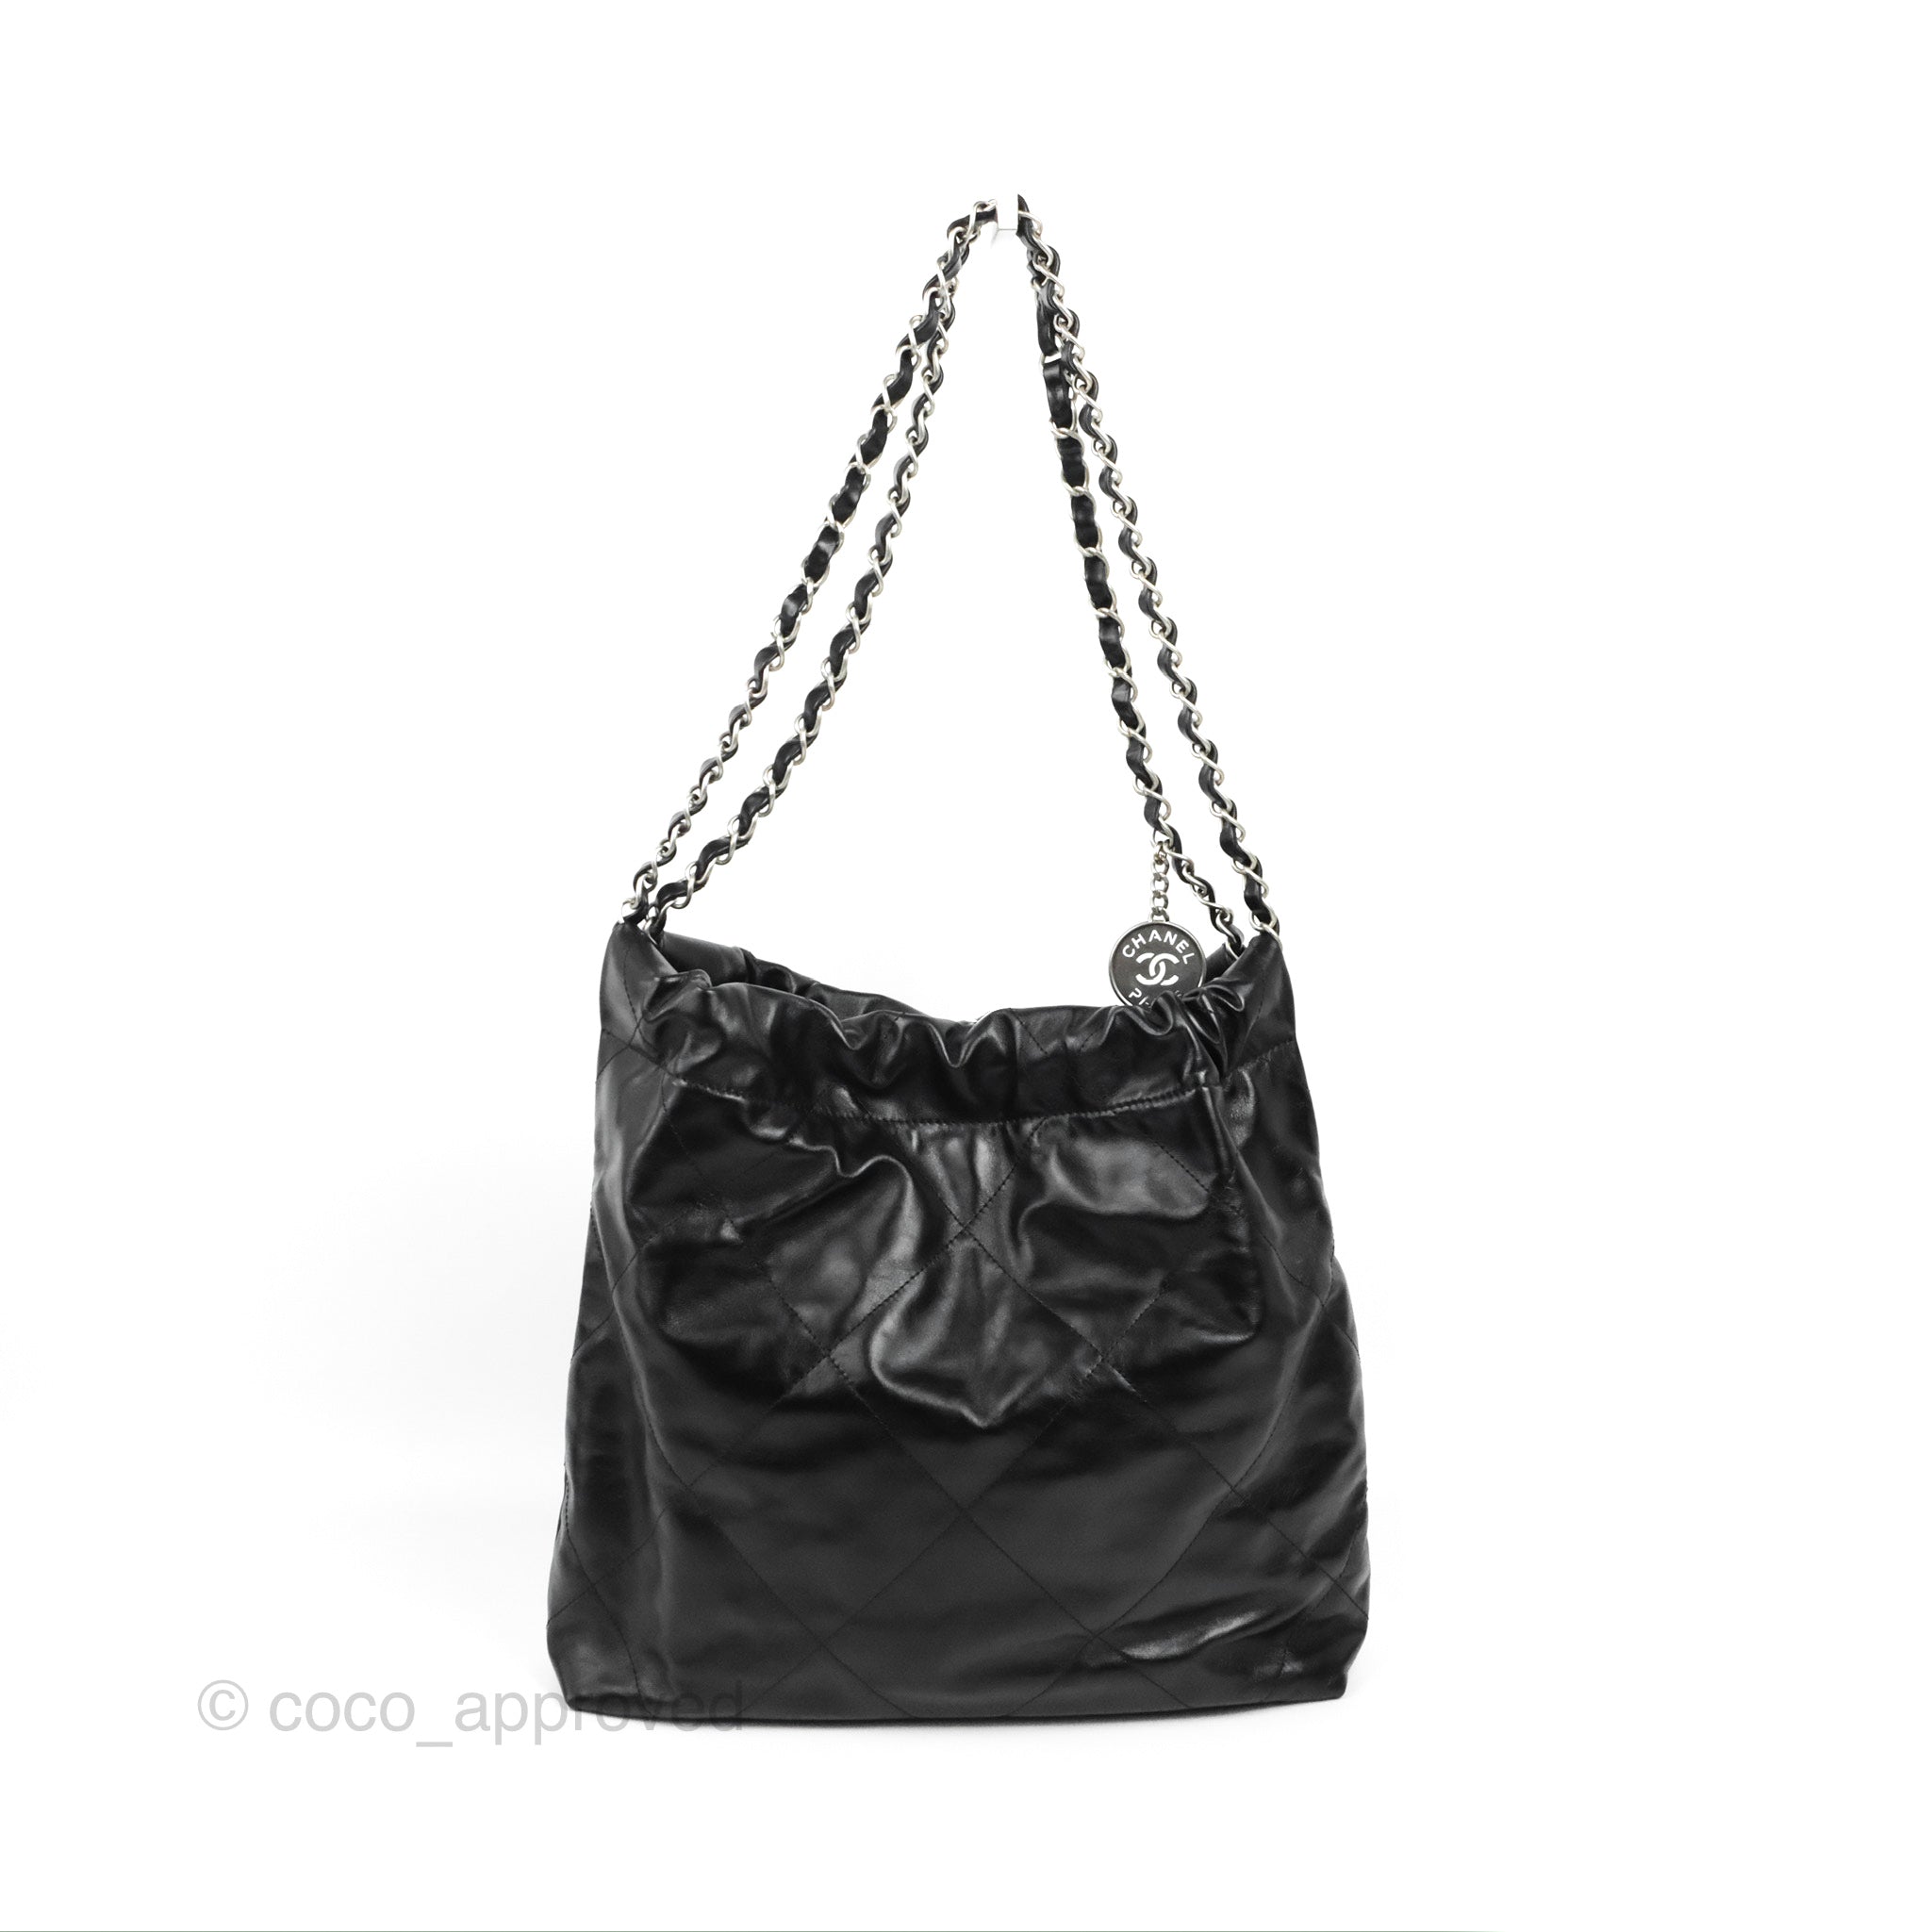 Chanel 22 calfskin mini bag Chanel Black in Pony-style calfskin